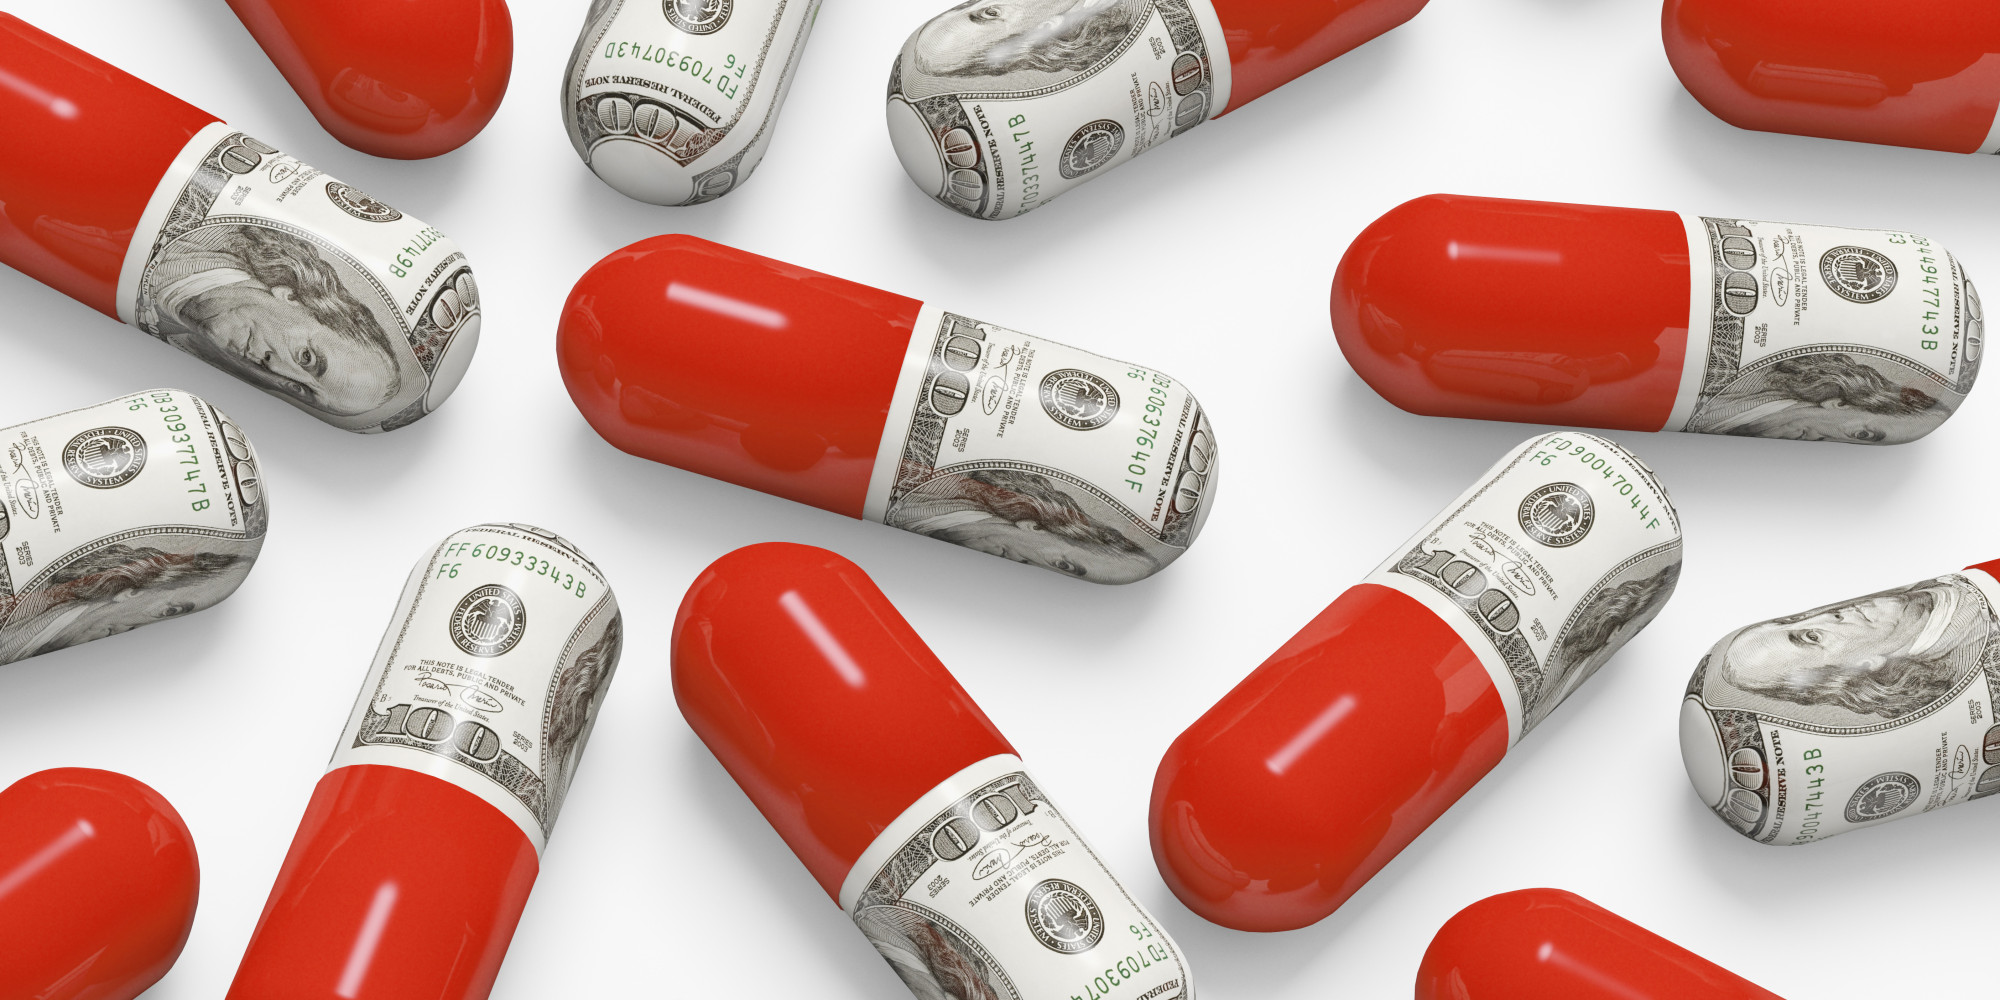 Regulation of medicine prices positive for medical insurance